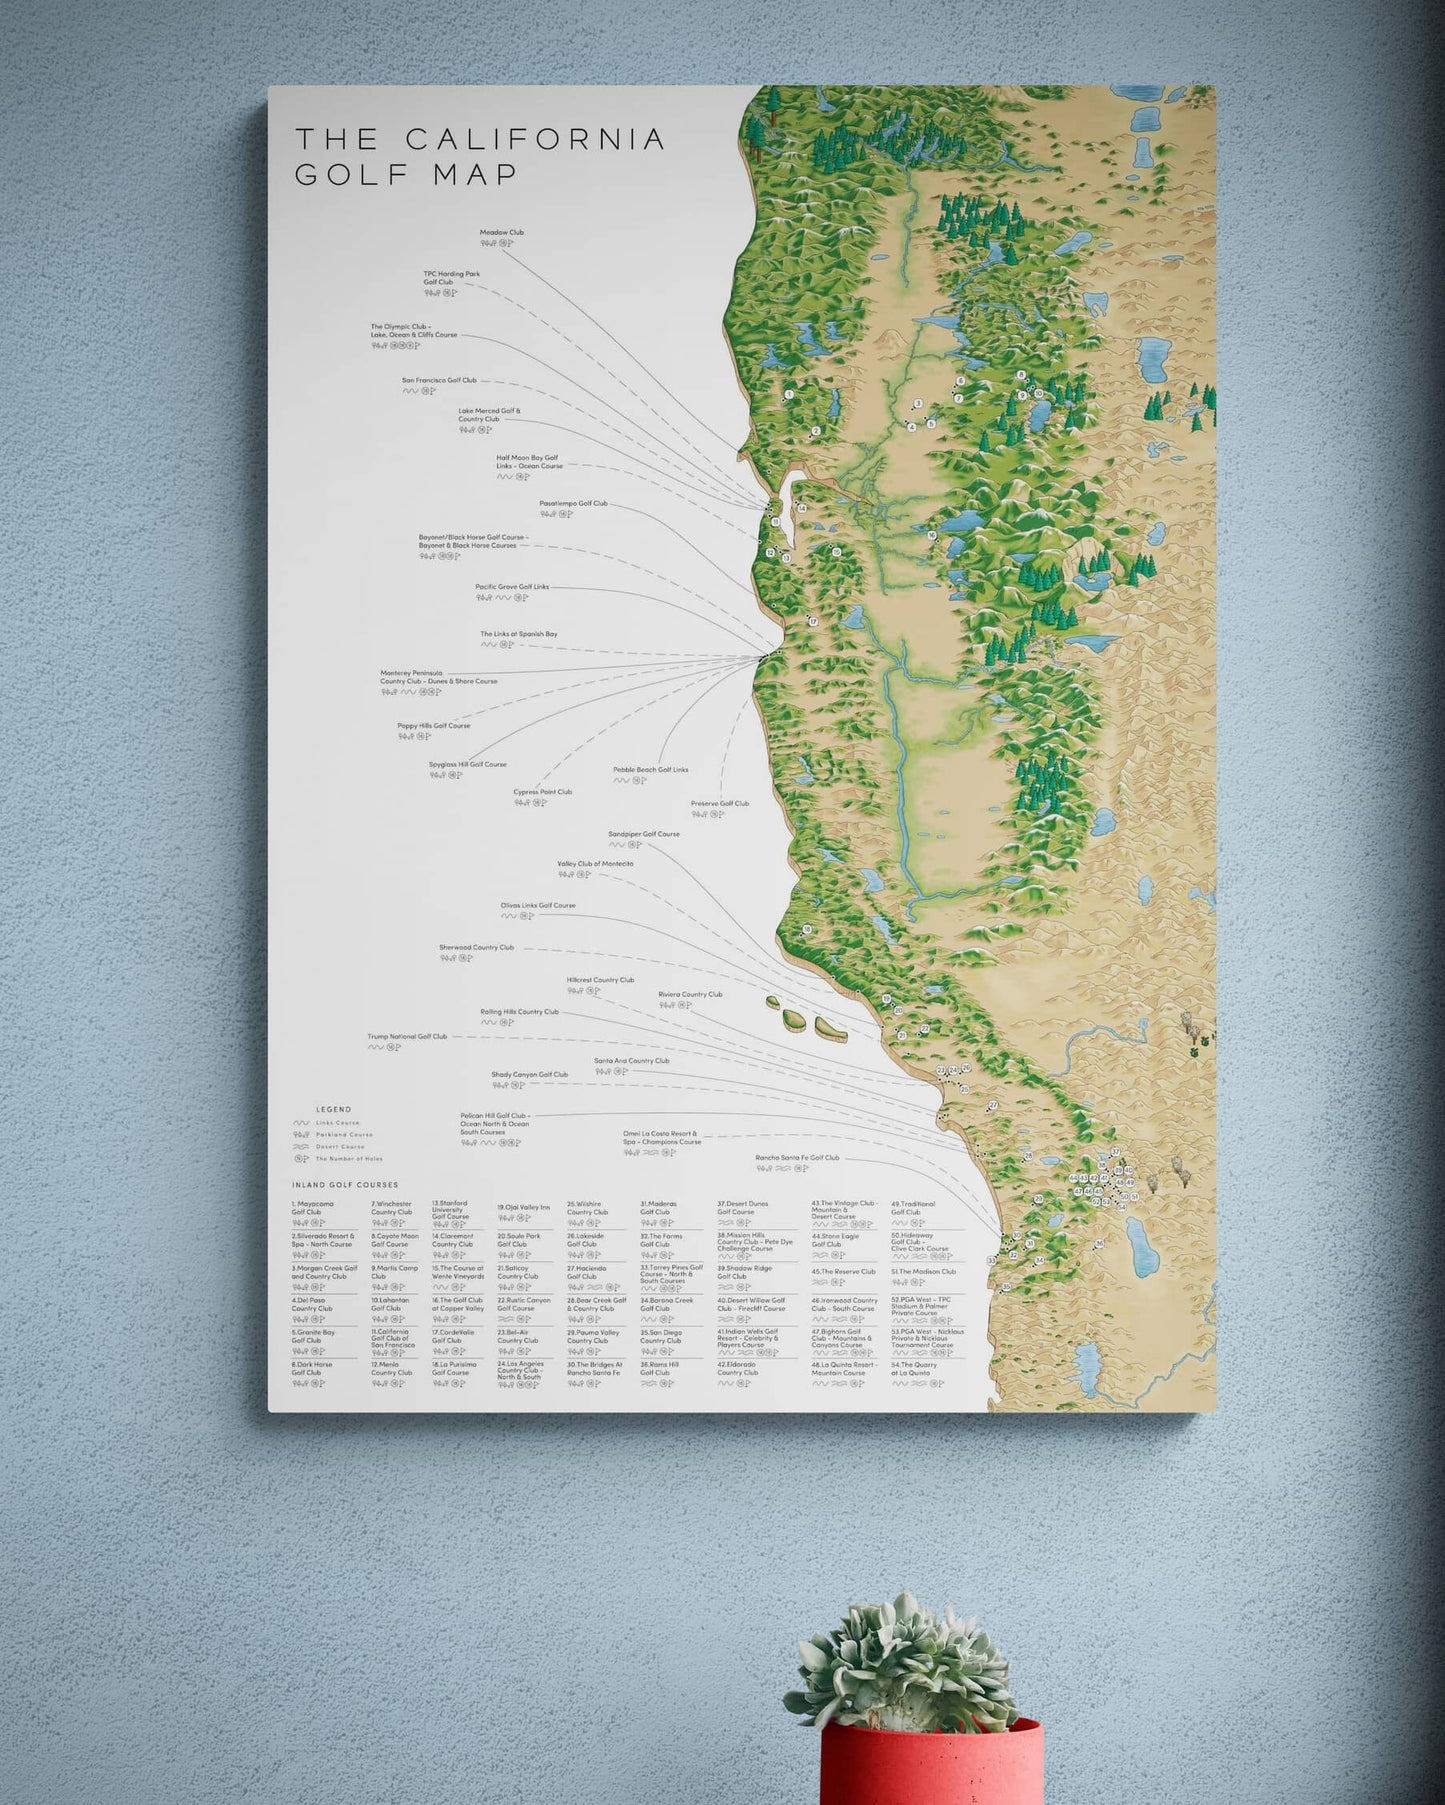 The California Golf Map